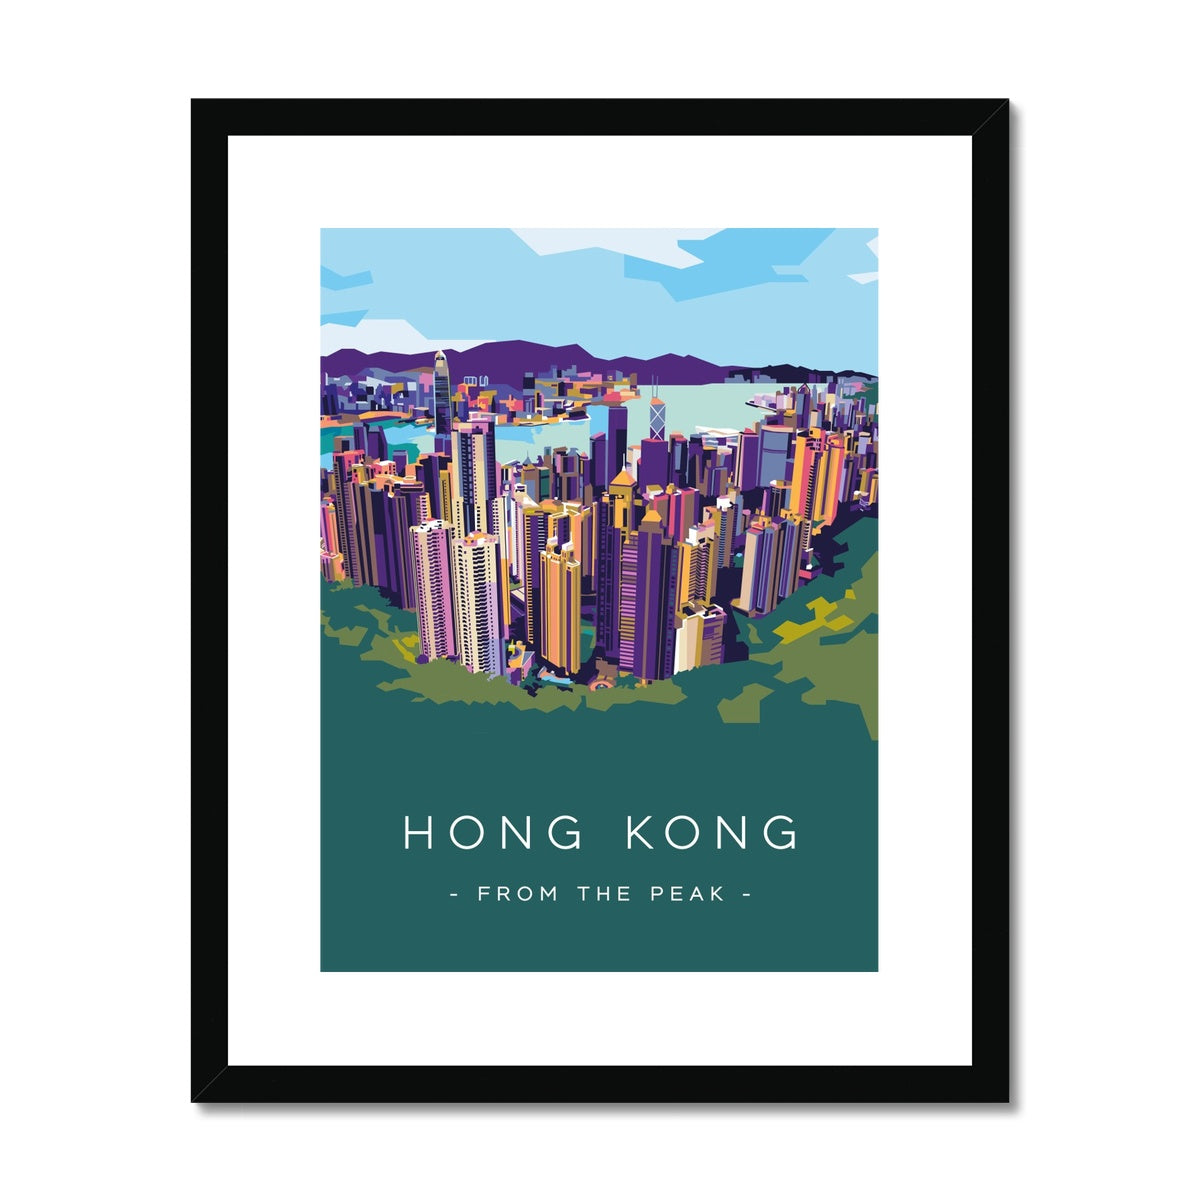 Hong Kong Travel - From the Peak Framed & Mounted Print